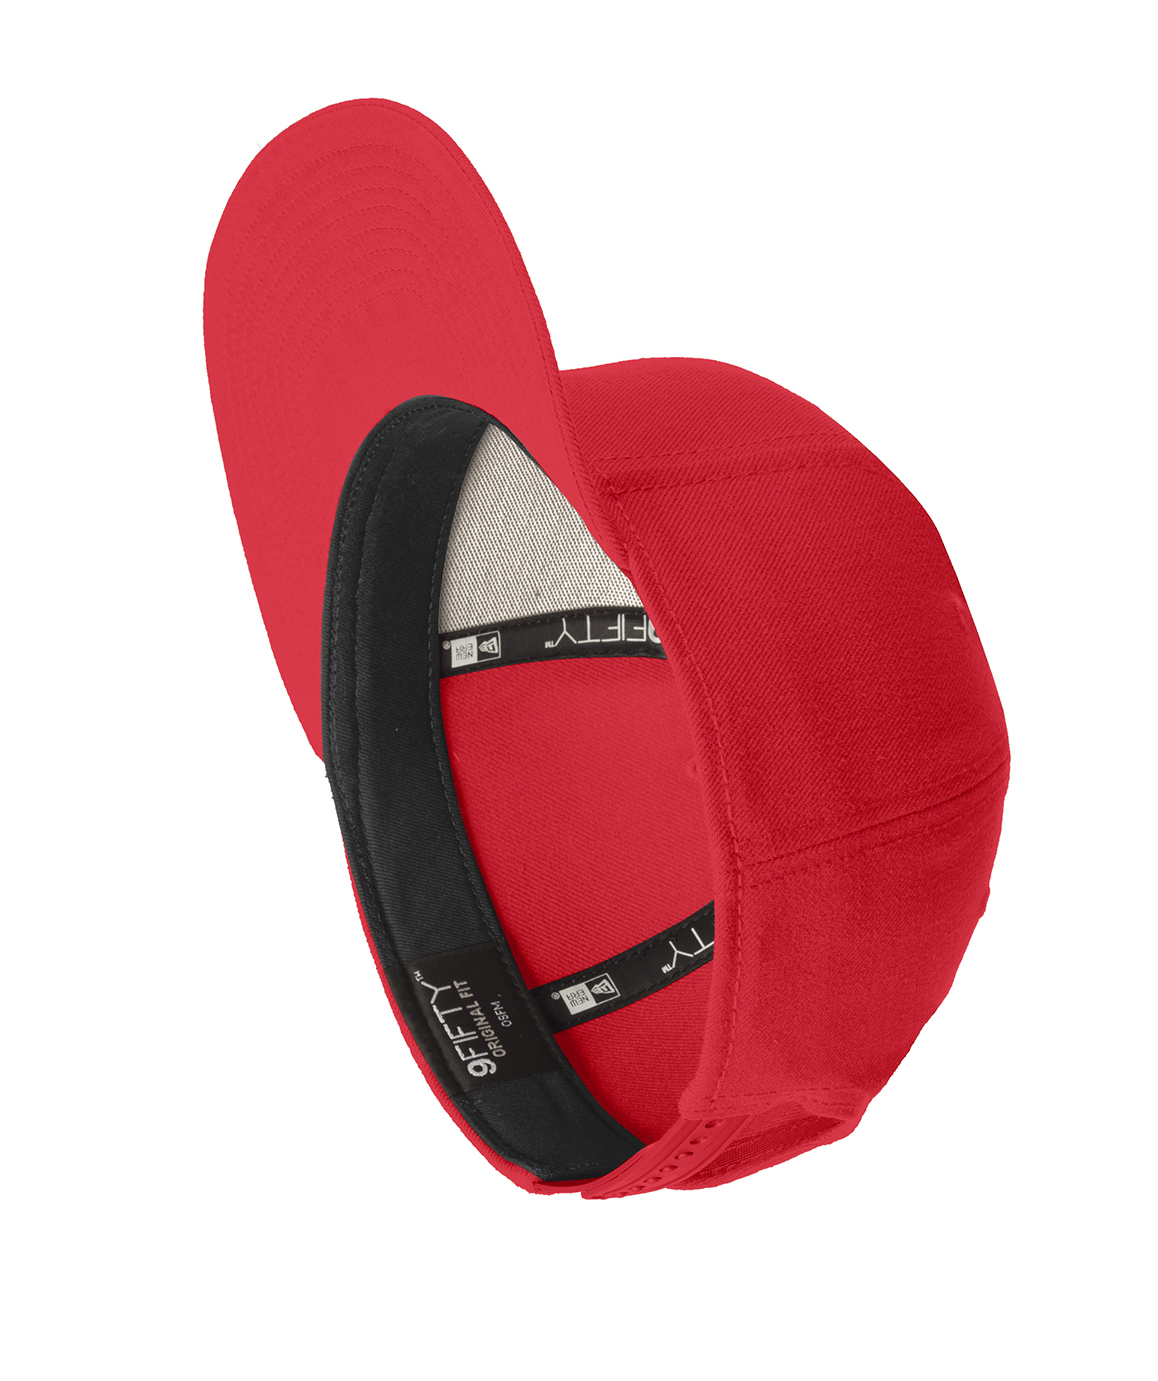 New Era Original Fit Flat Bill Snapback Cap-Scarlet